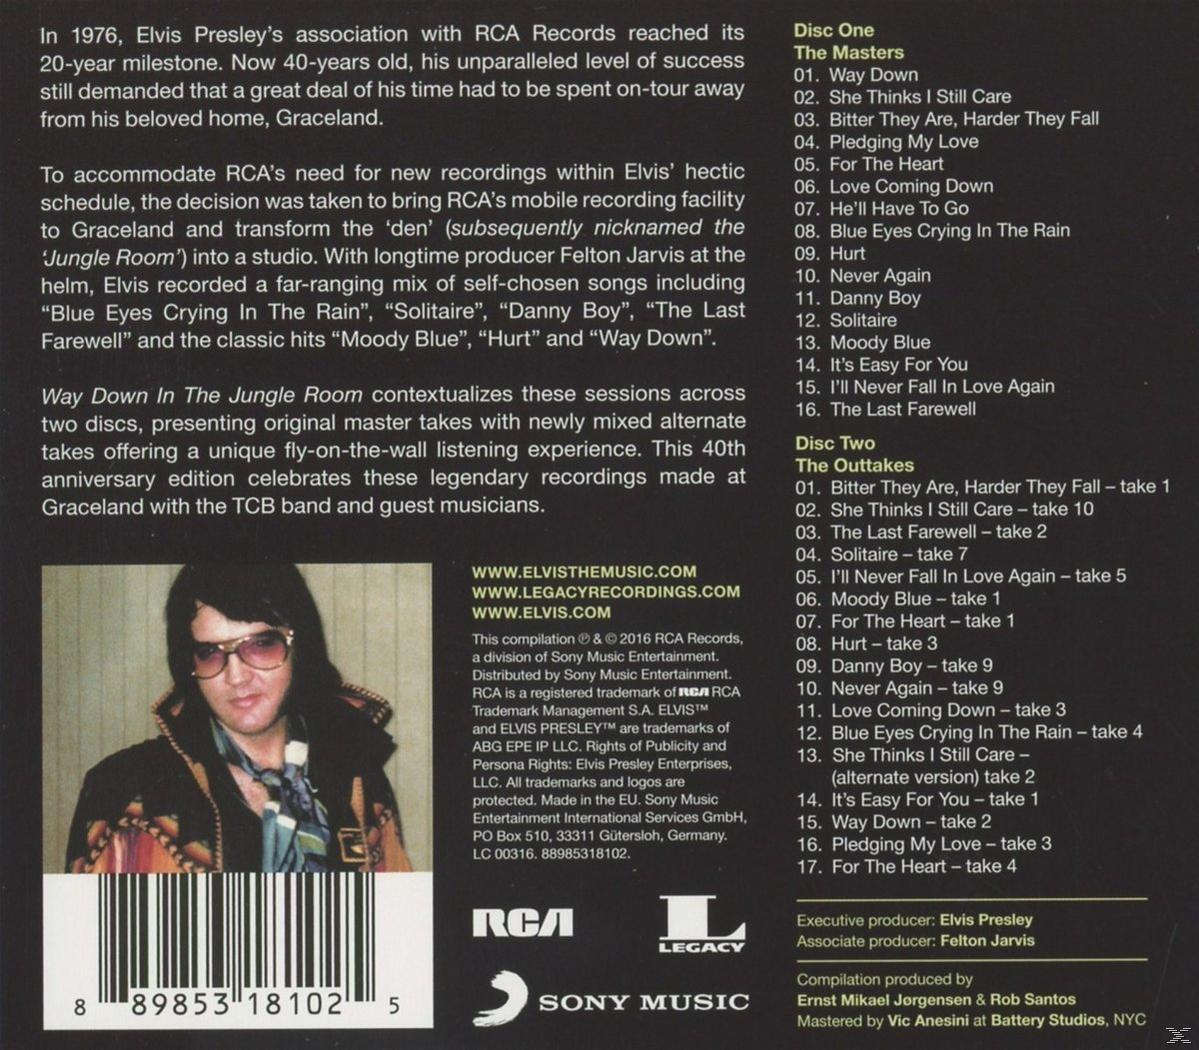 Elvis Presley - the Room - Jungle Down in Way (CD)